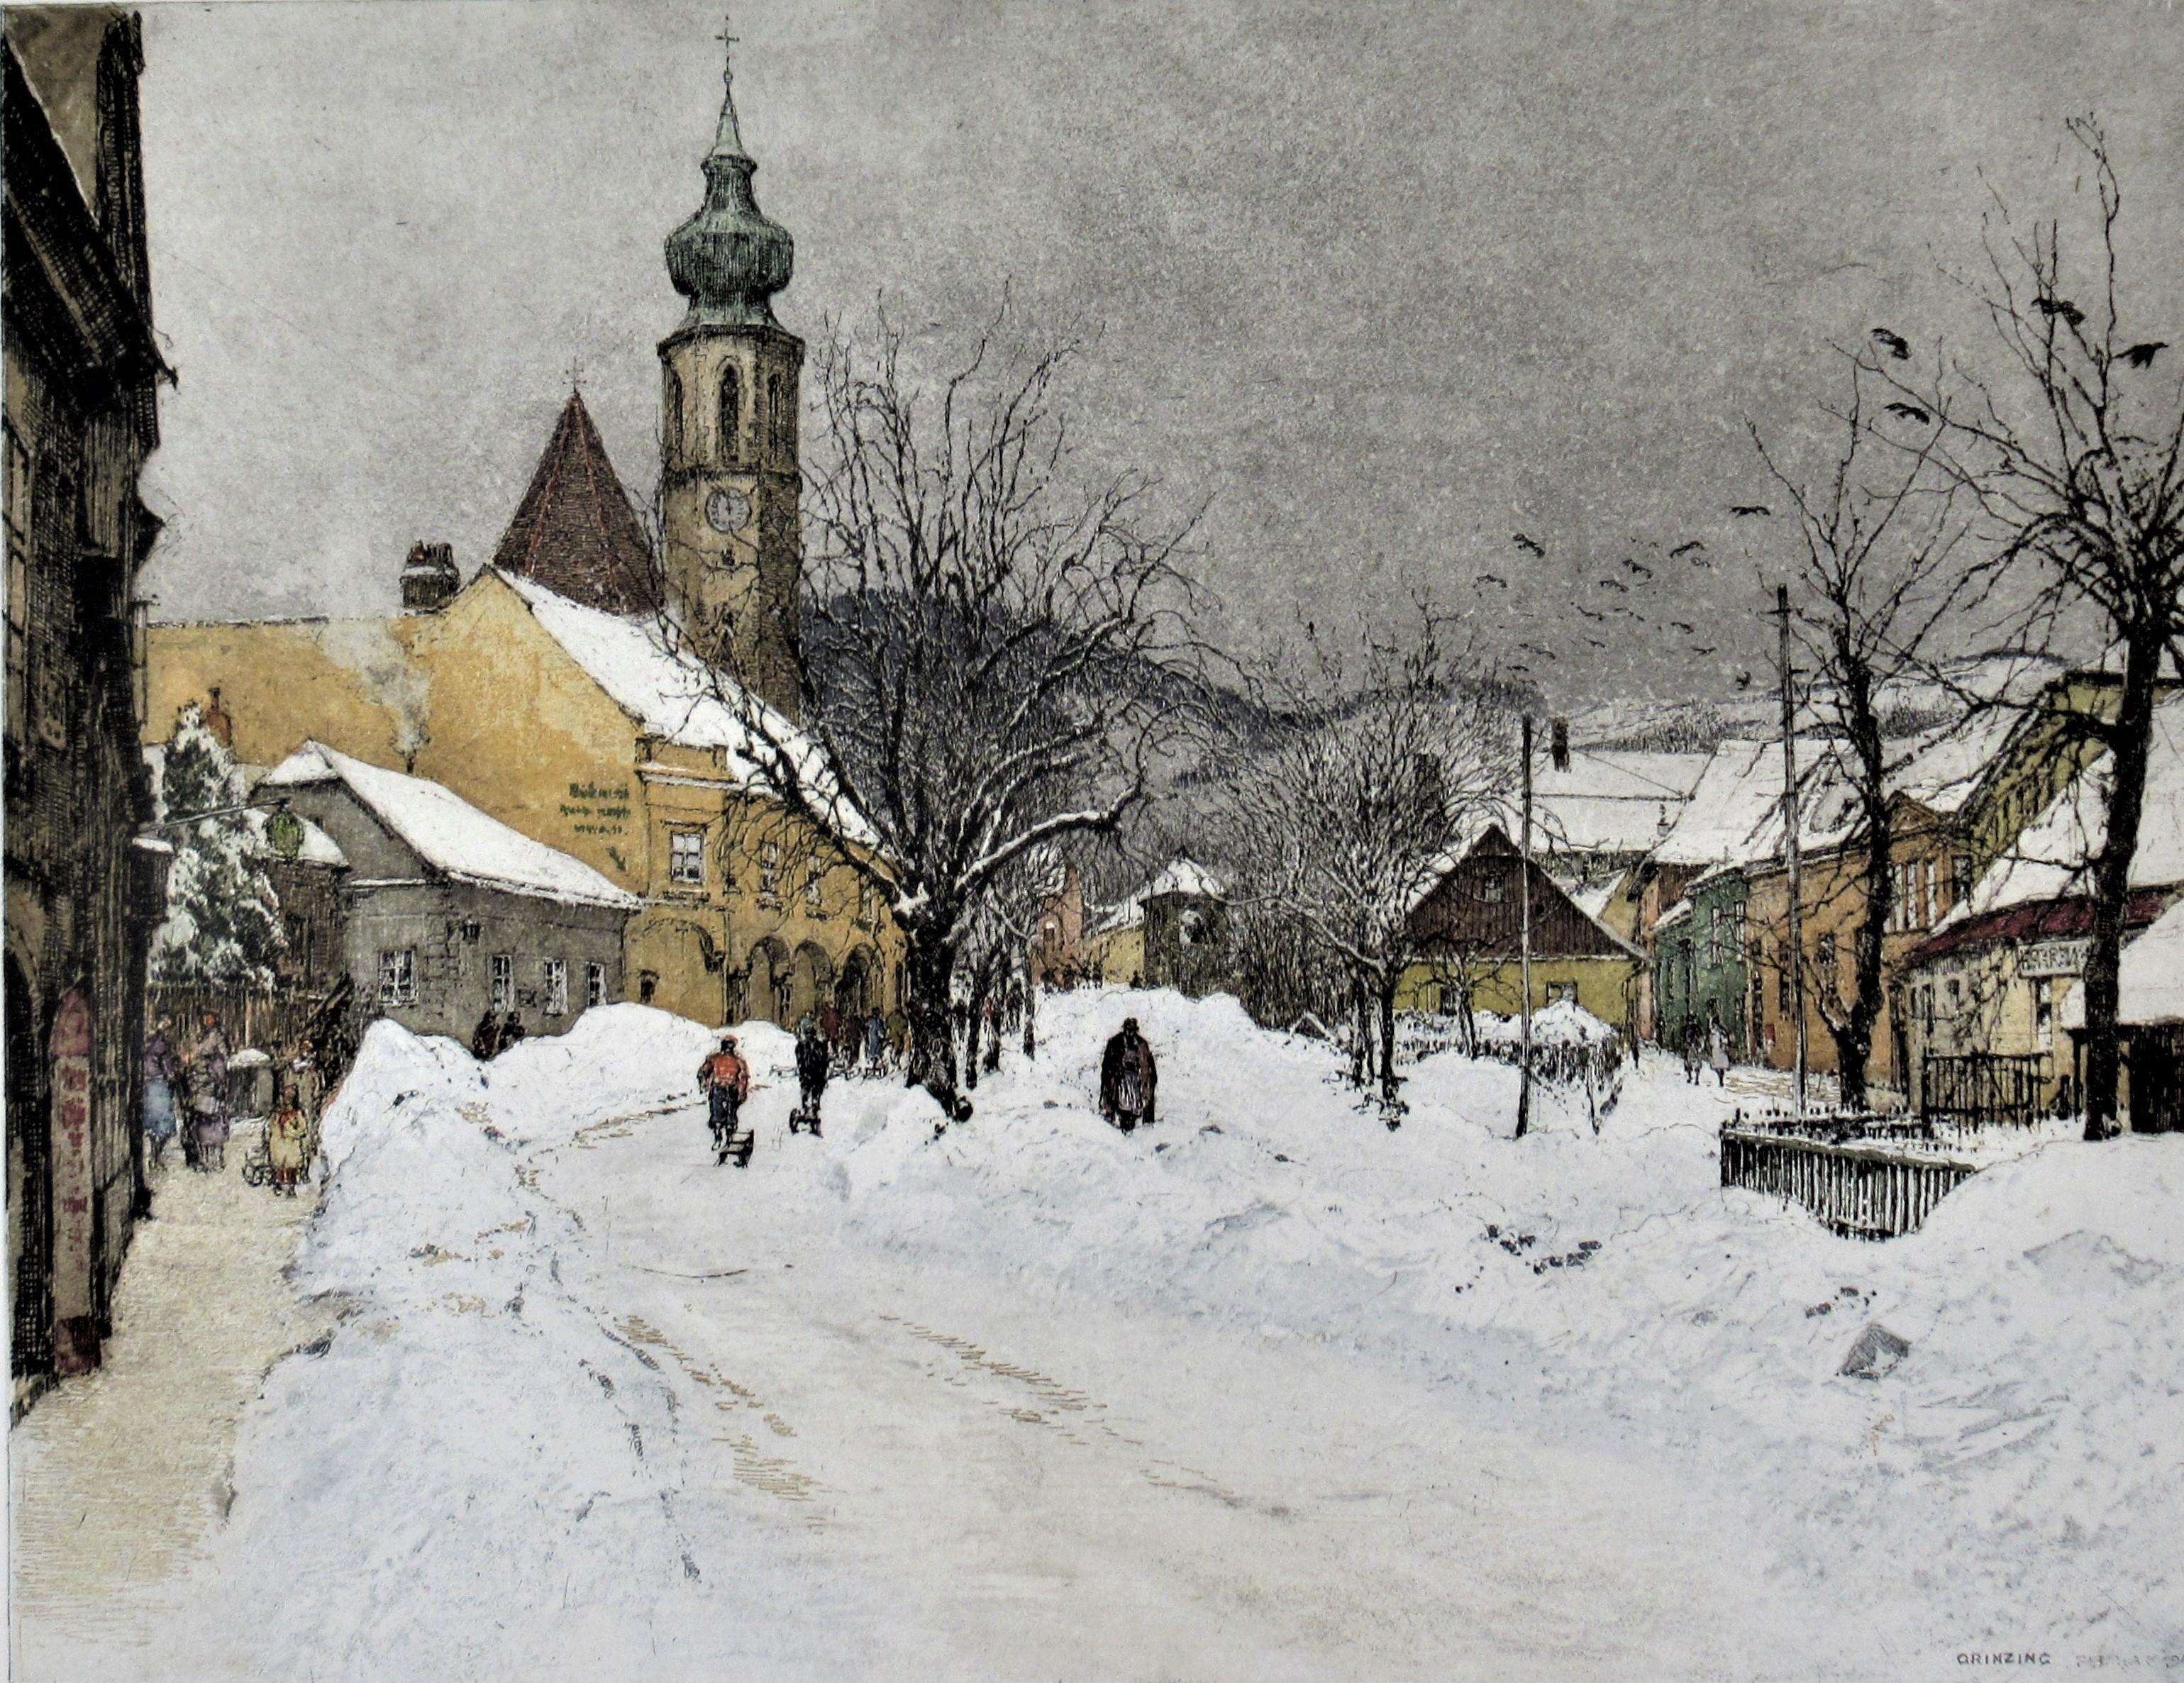 Grinzing Snow Scene, Austria, large color etching - Print by Luigi Kasimir